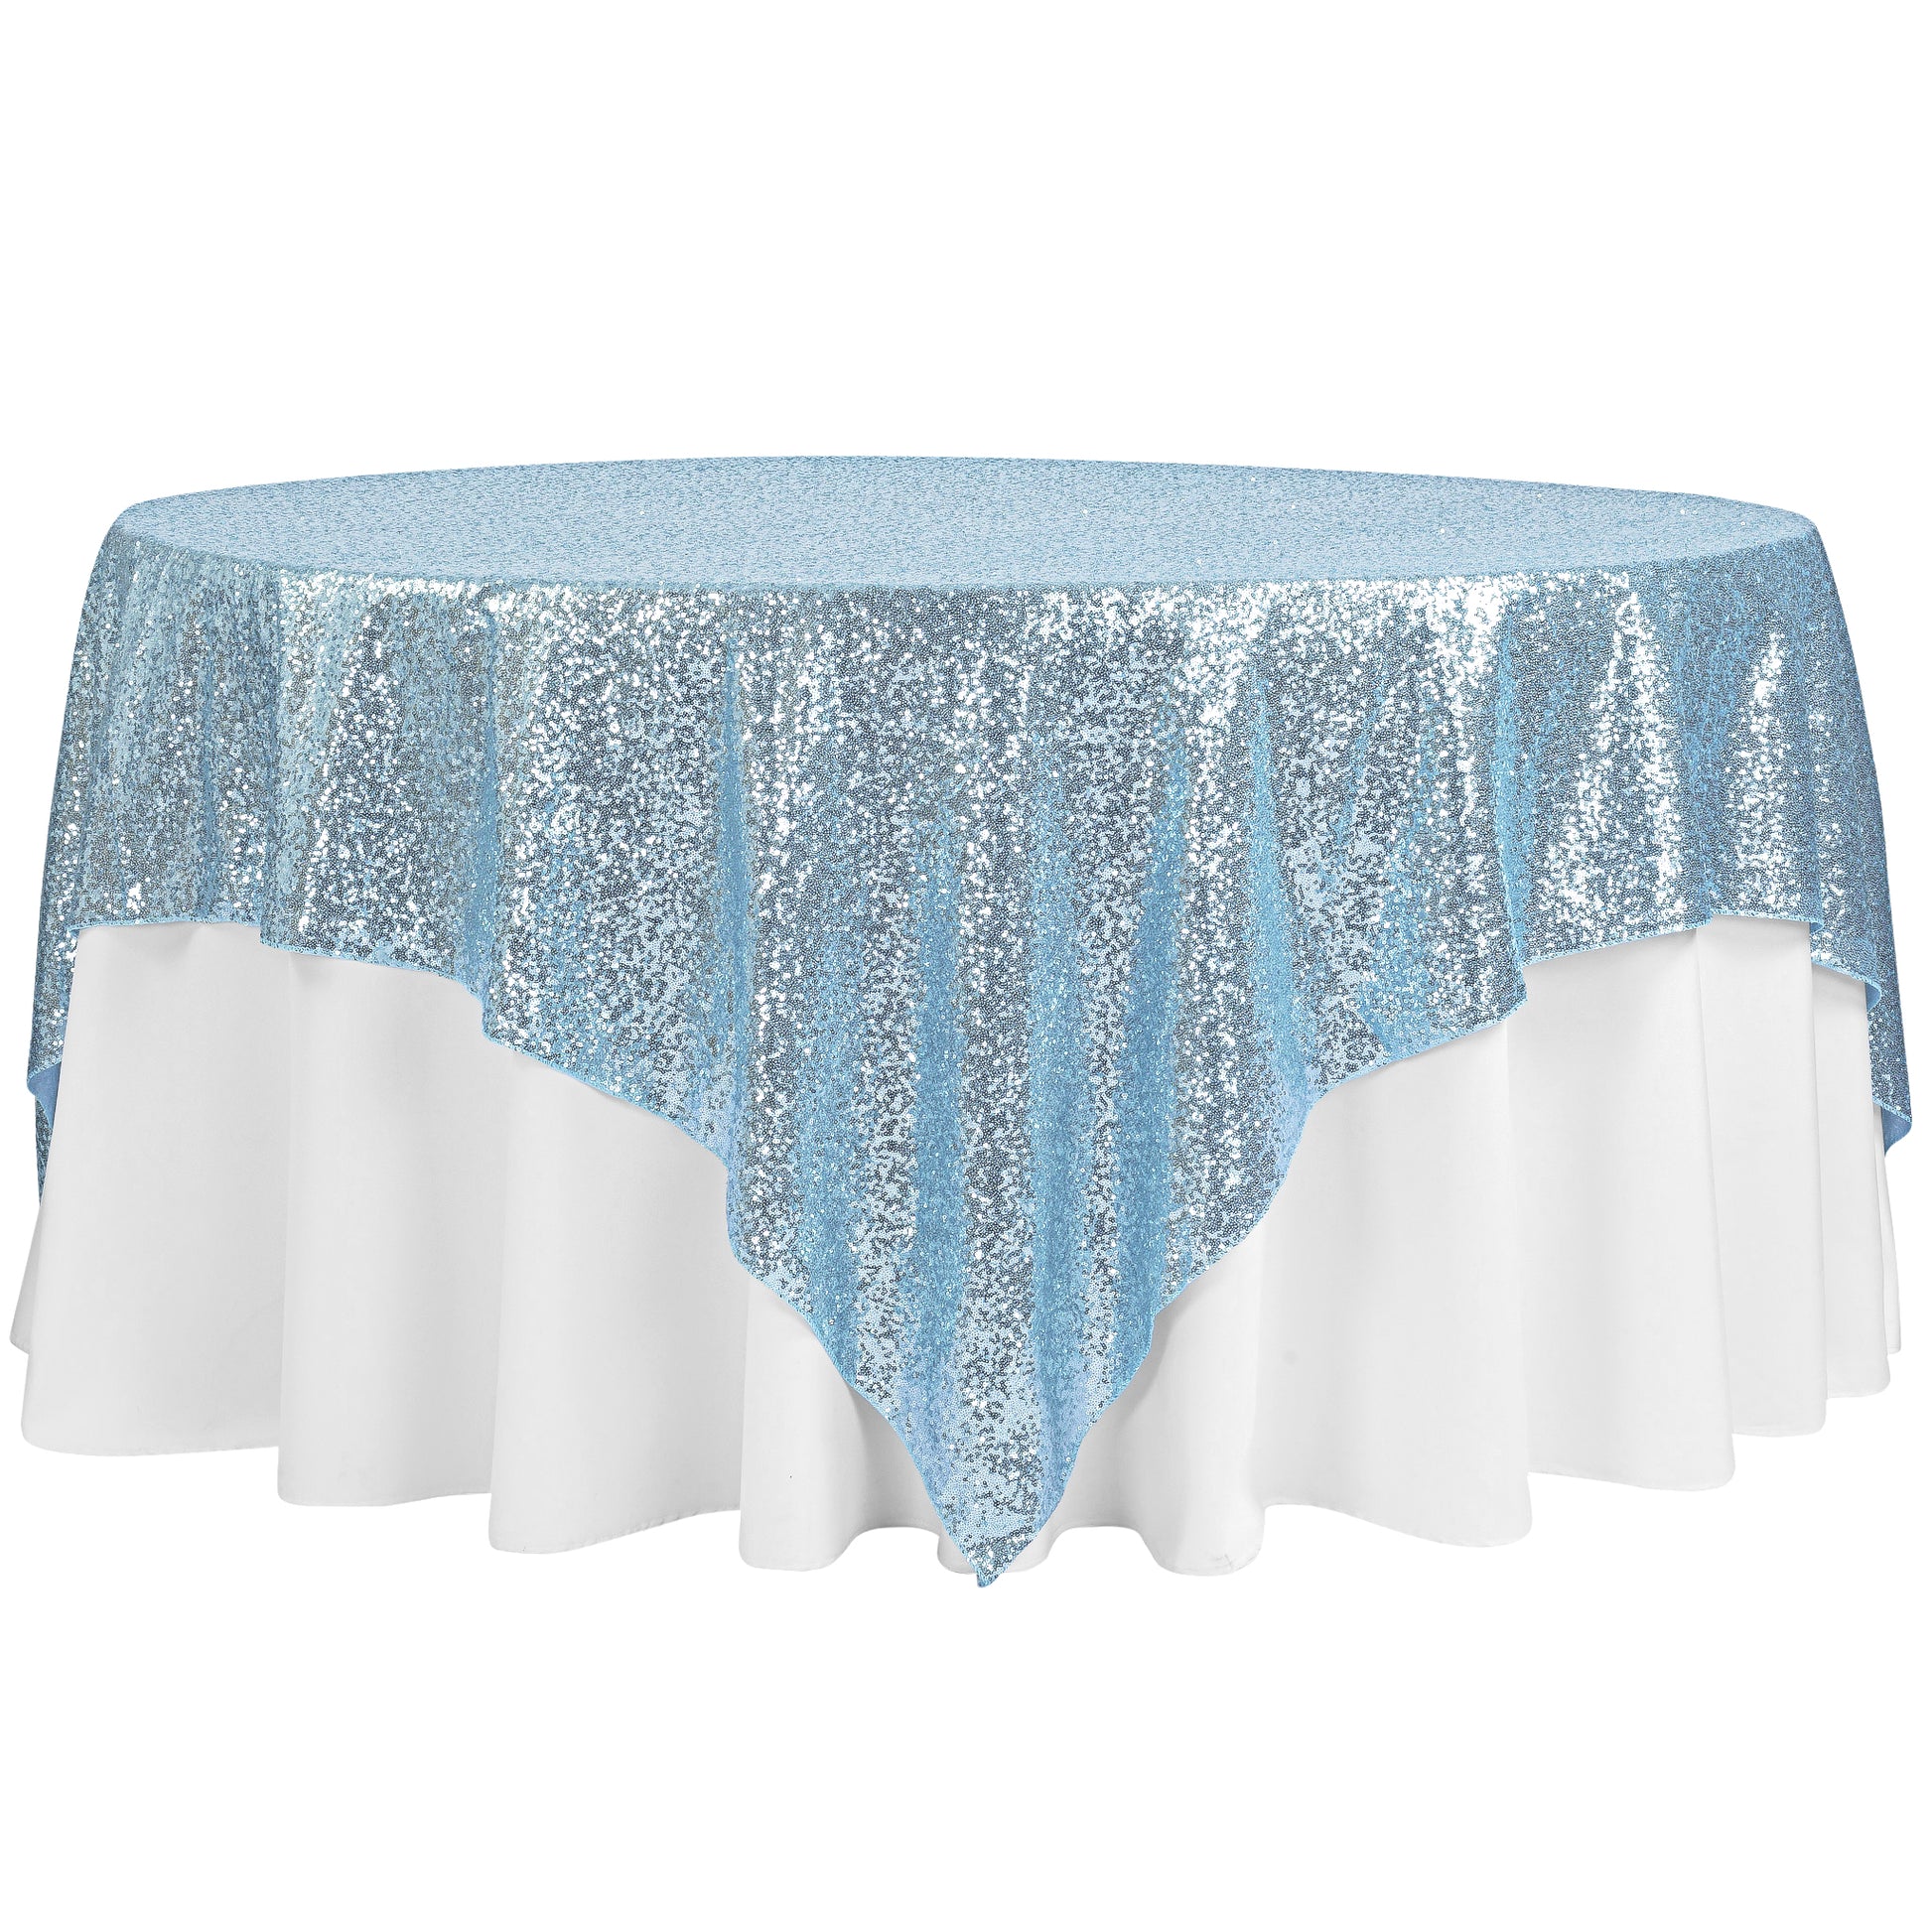 Glitz Sequin Table Overlay Topper 90"x90" Square - Baby Blue - CV Linens